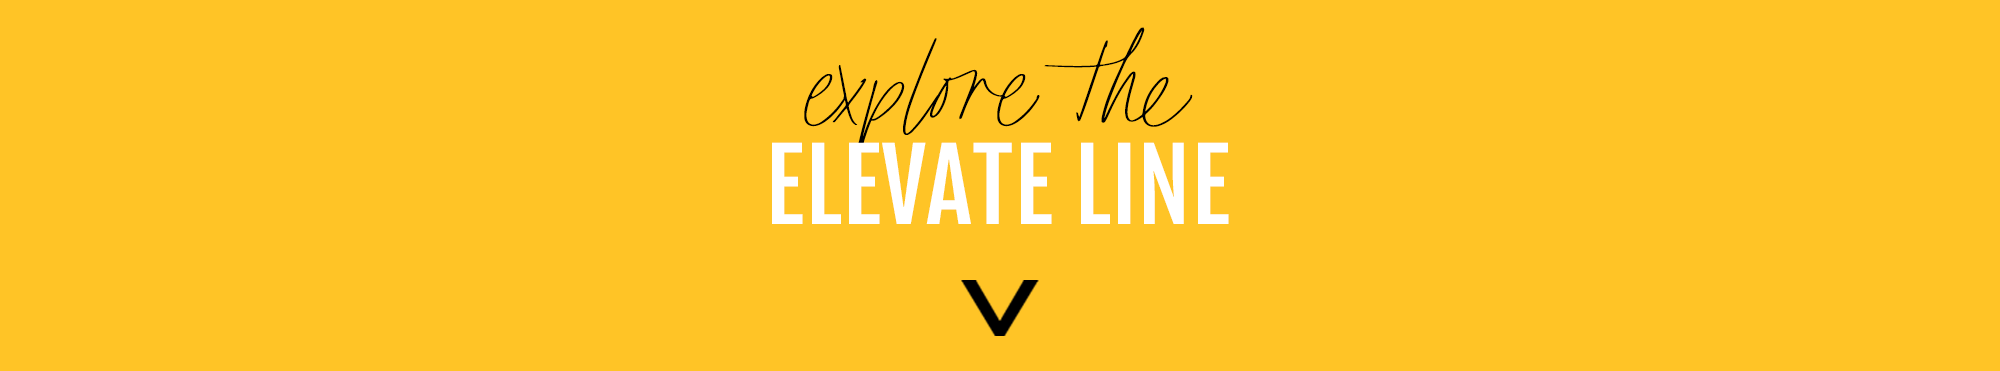 explore the ELEVATE LINE